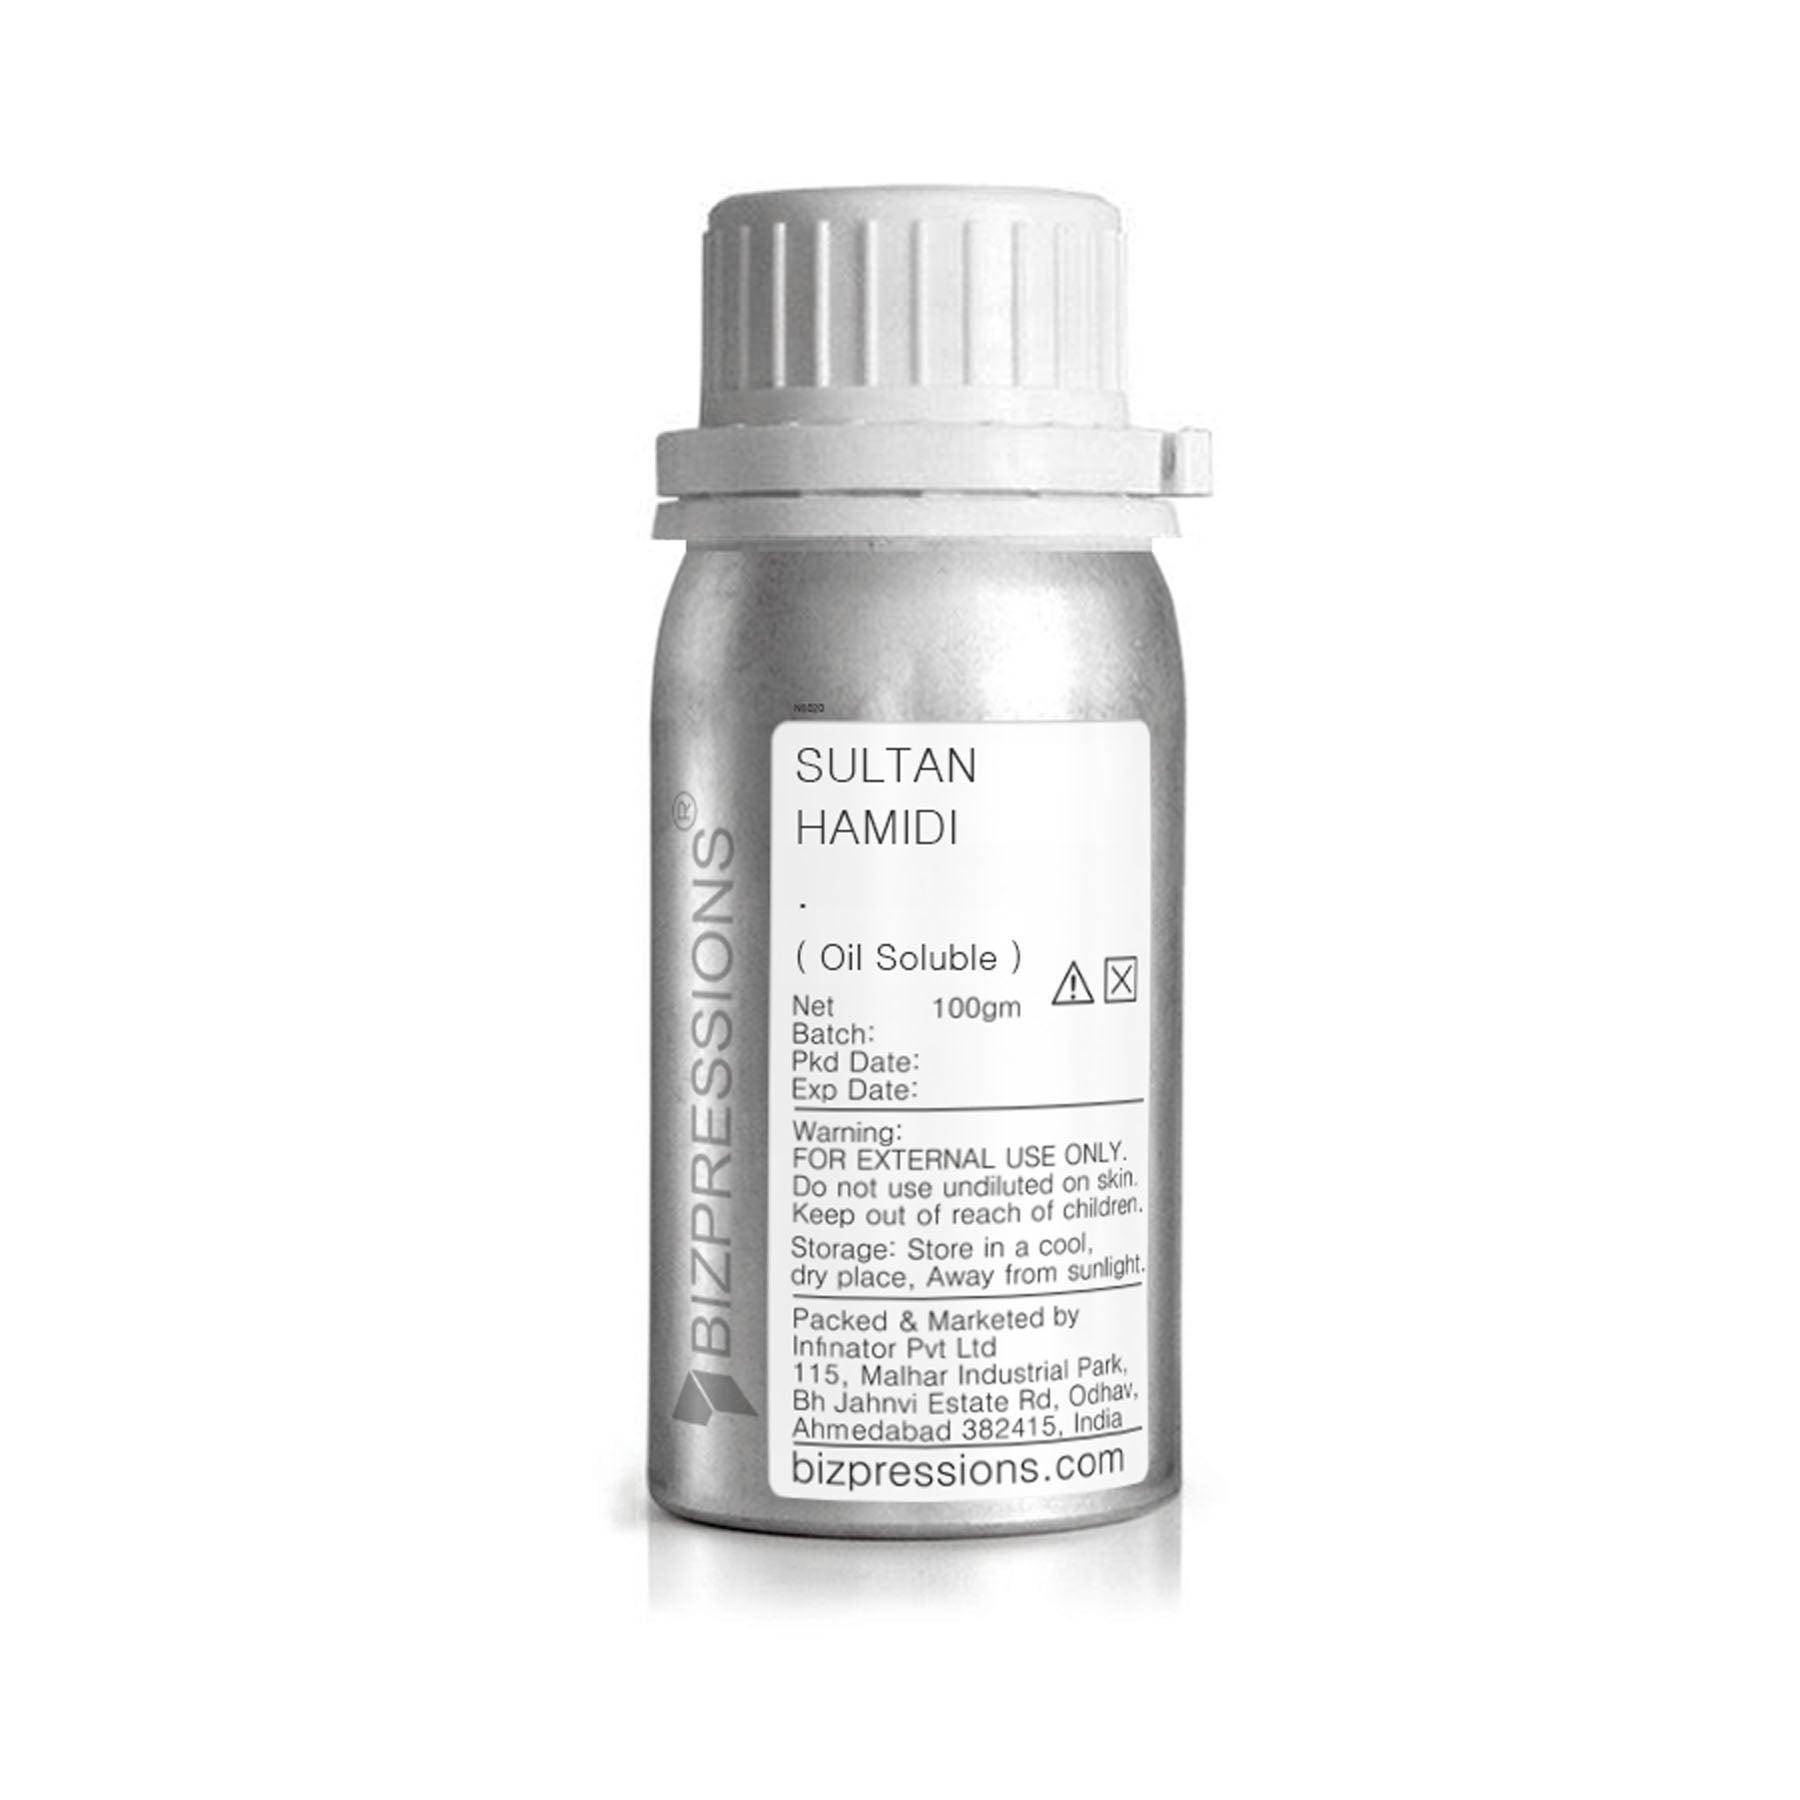 SULTAN HAMIDI - Fragrance ( Oil Soluble ) - 100 gm